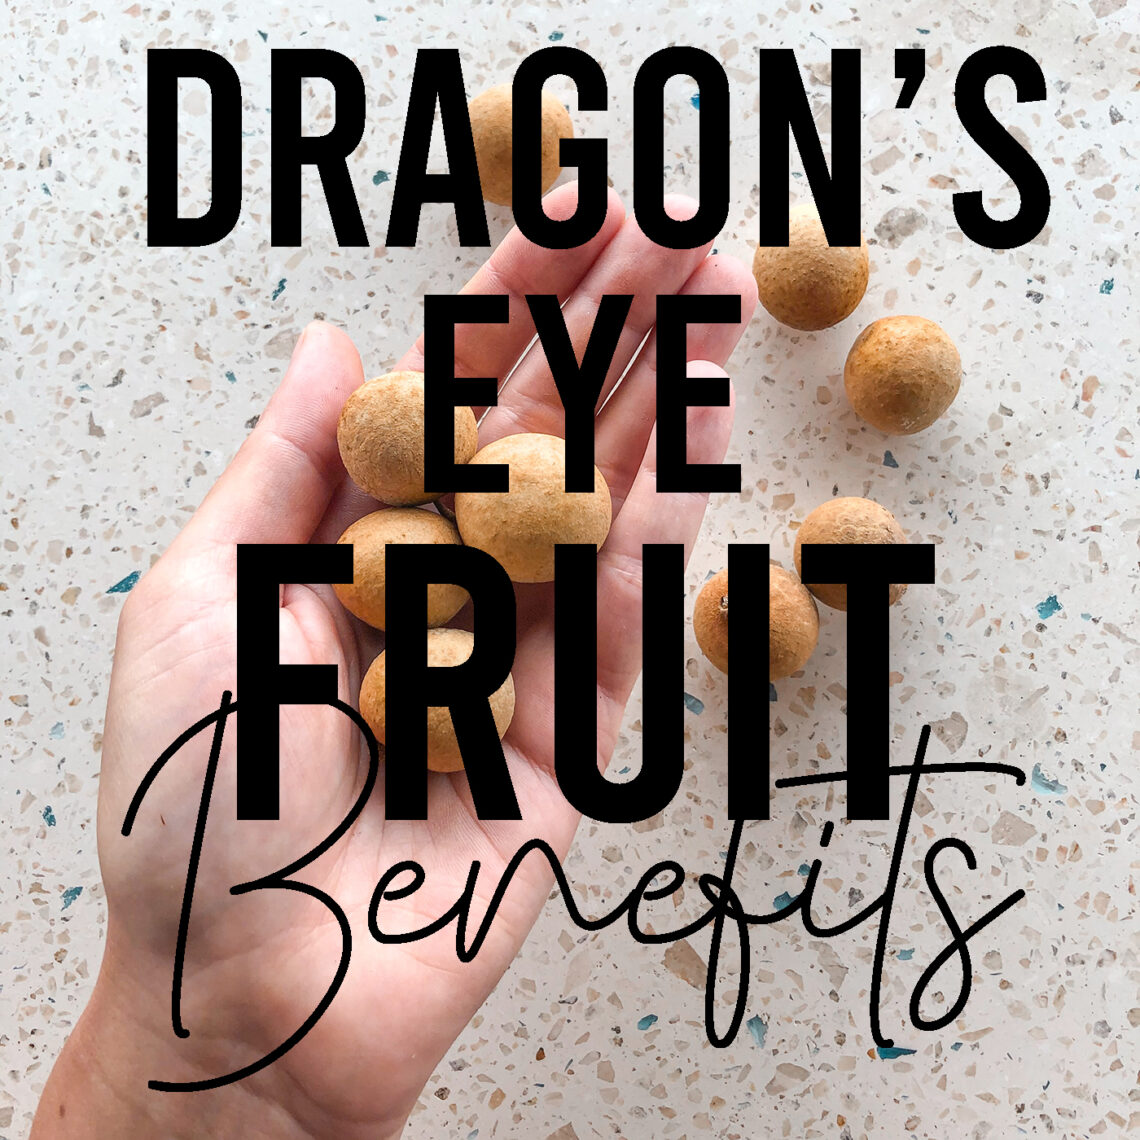 Dragon Eye fruit heath benefits